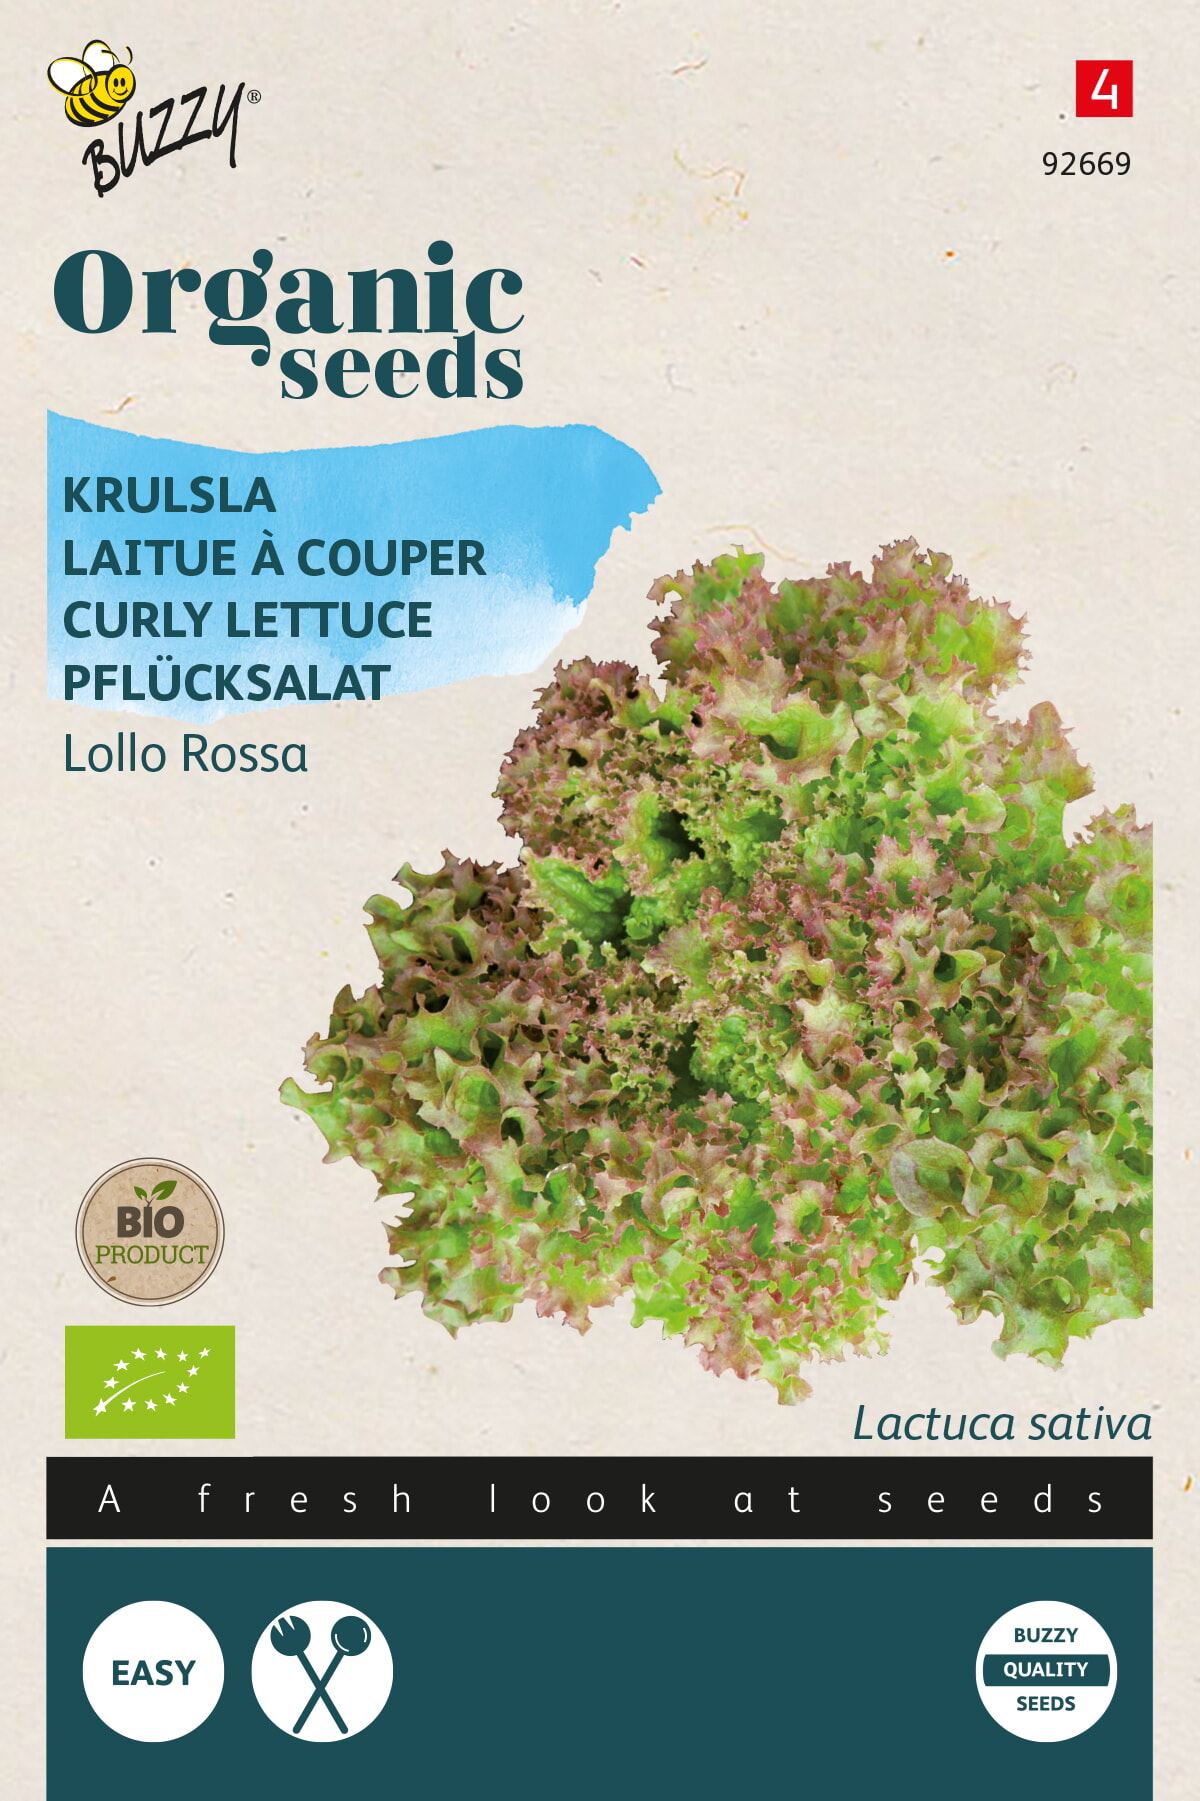 Organic curly lettuce Lollo rossa